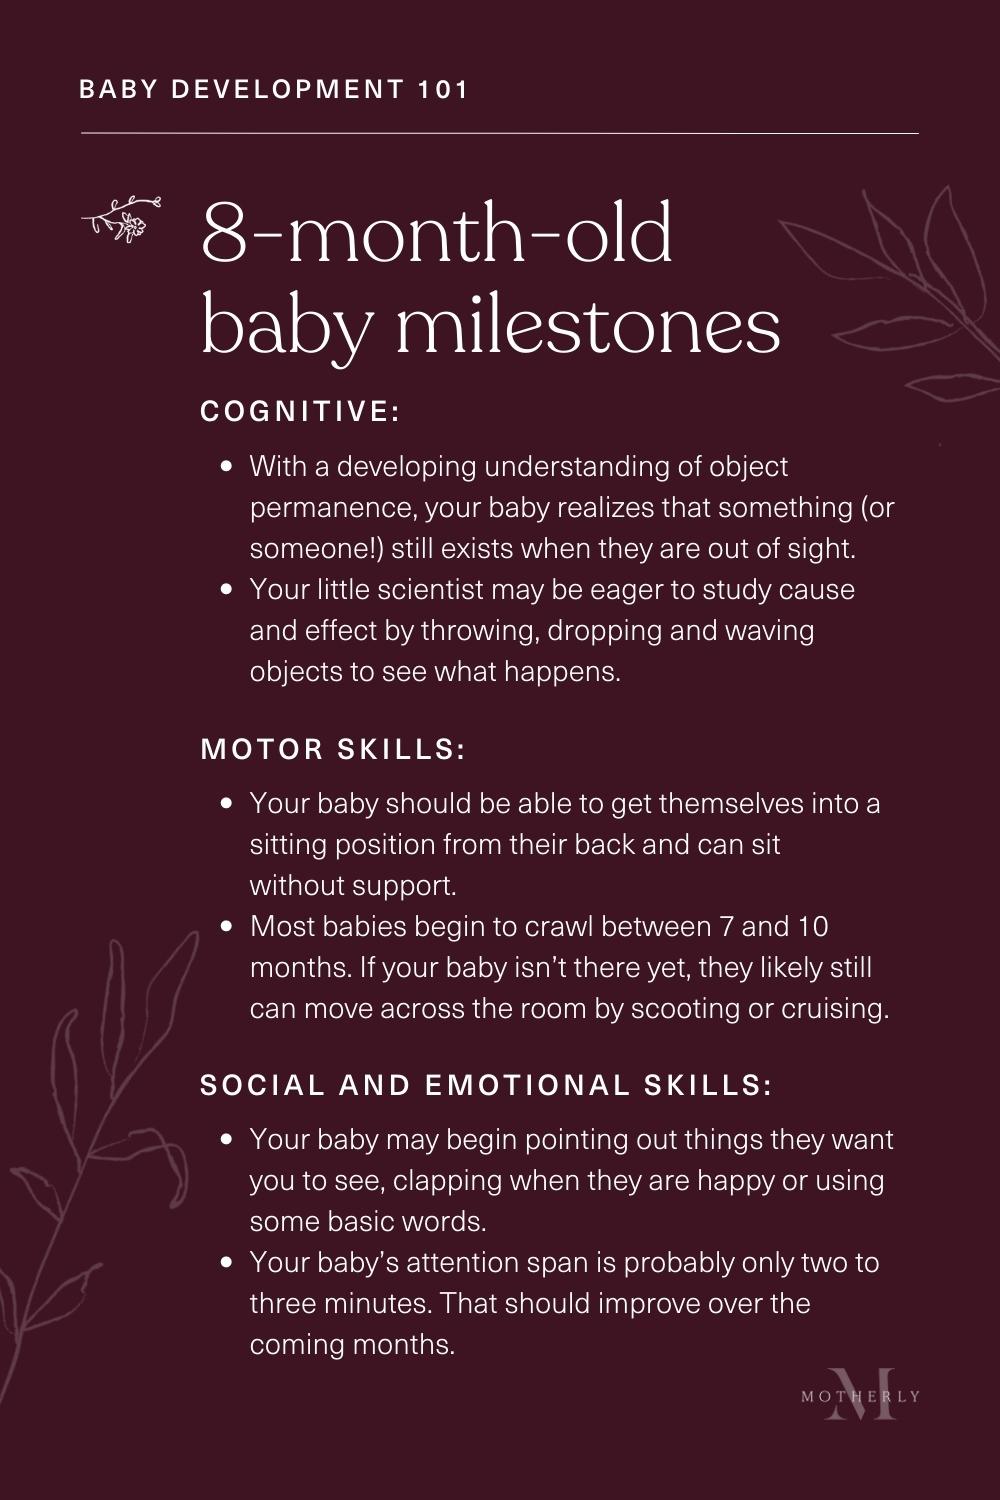 summary of 8-month-old baby milestones - sensory and motor development